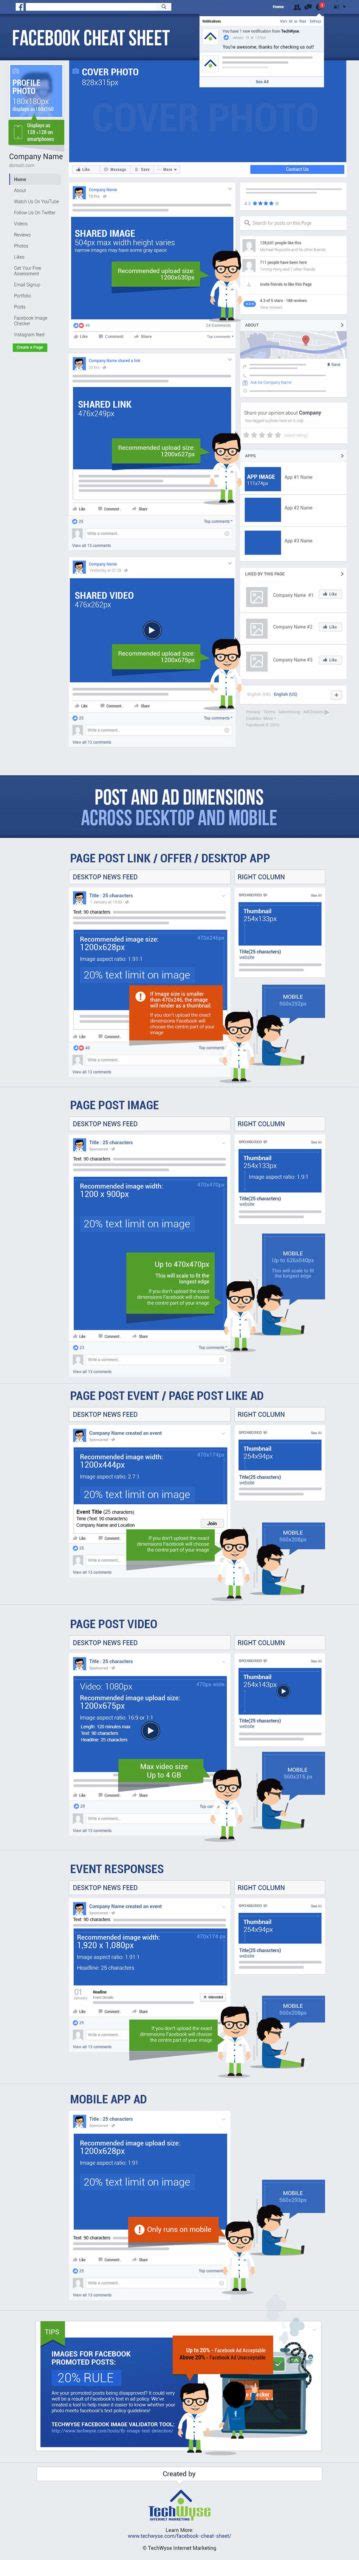 Facebook Cheat Sheet Shortcuts Infographic Facebook Cheat Sheet Images